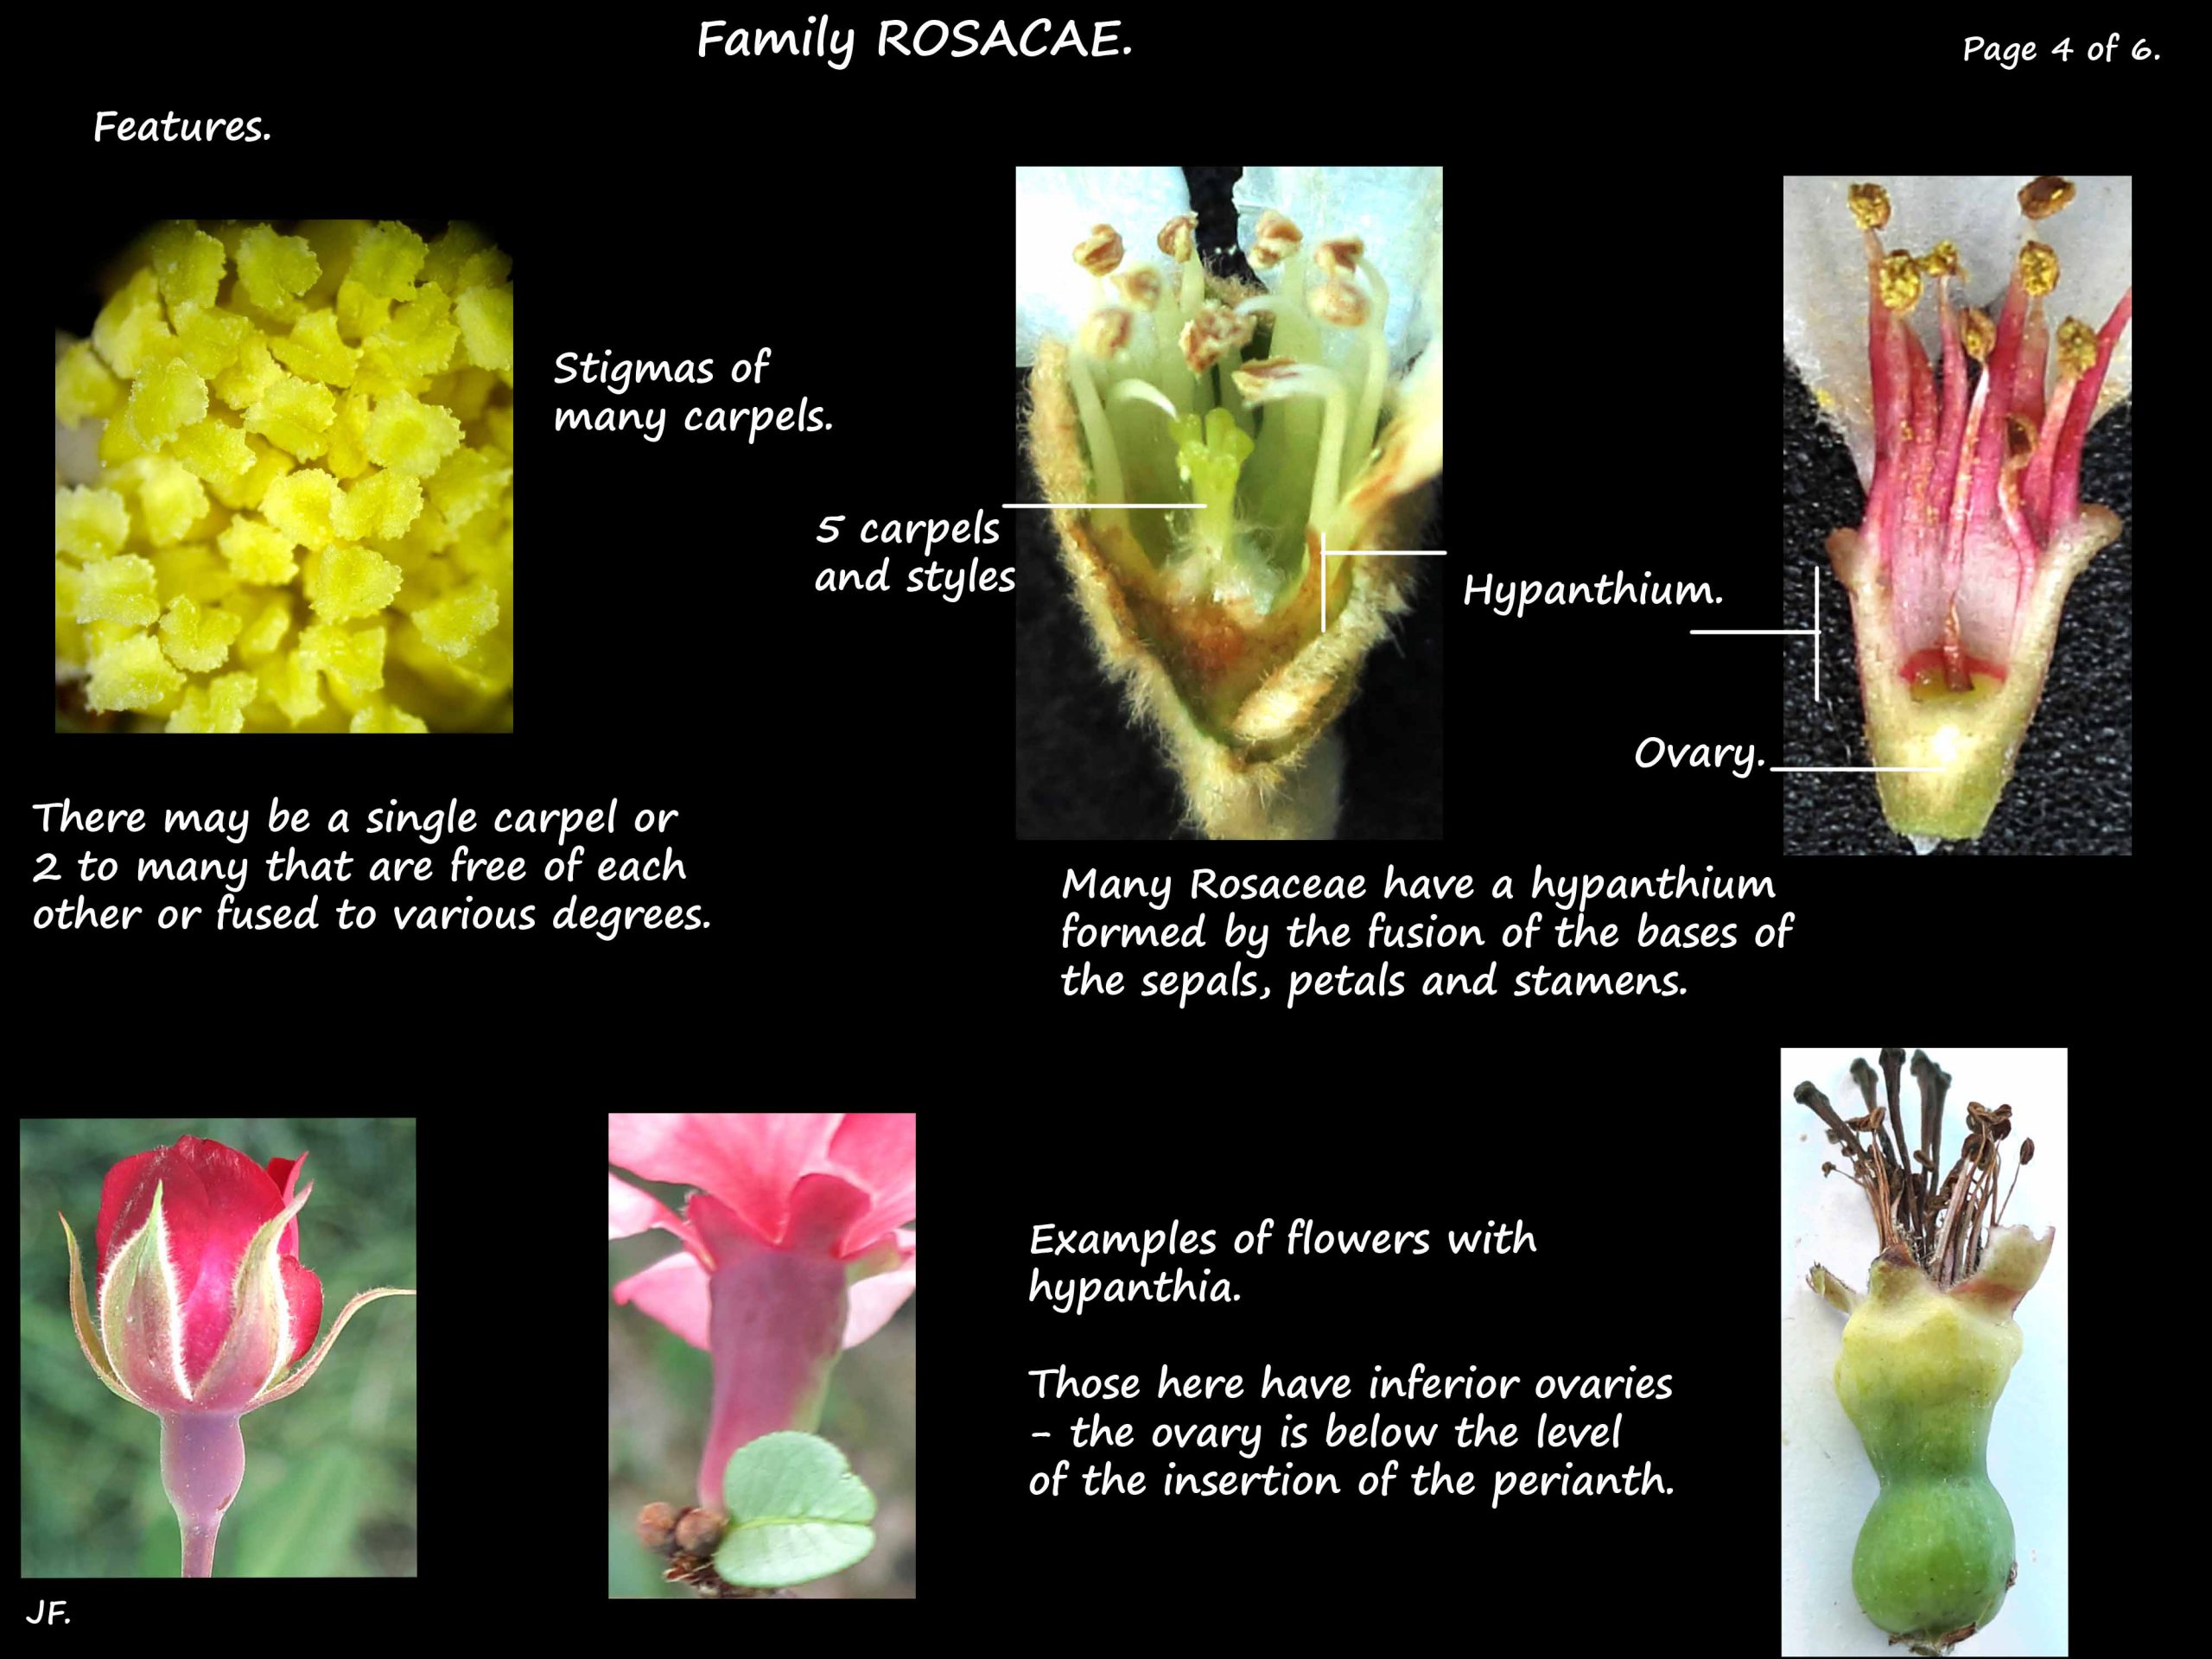 4 Rosaceae carpels